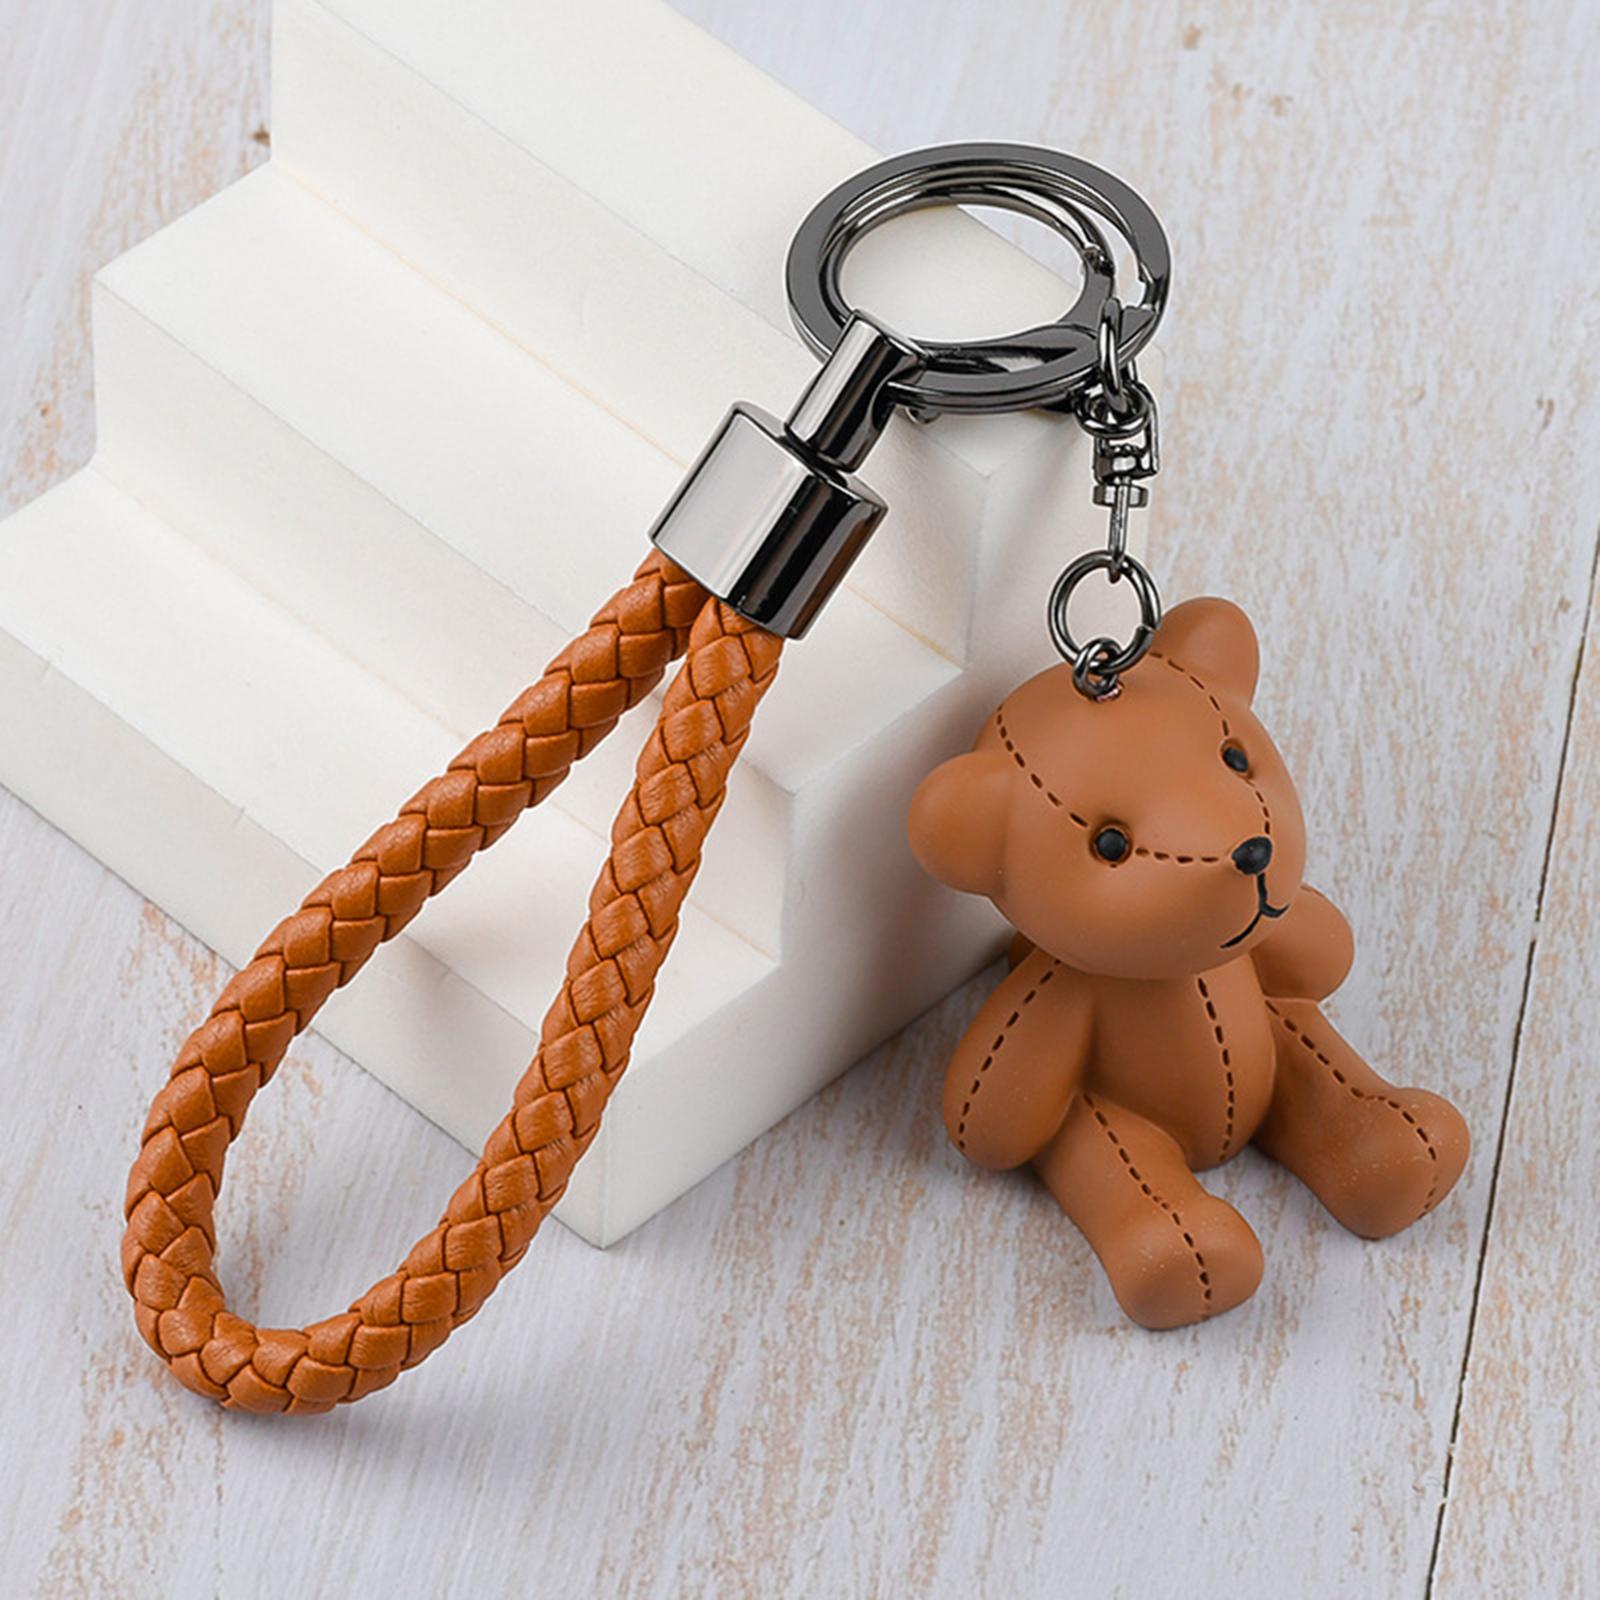 Bear Key Chain Pendant Resin Animal Pendant Creative Gift Car Bag Keychain Brown